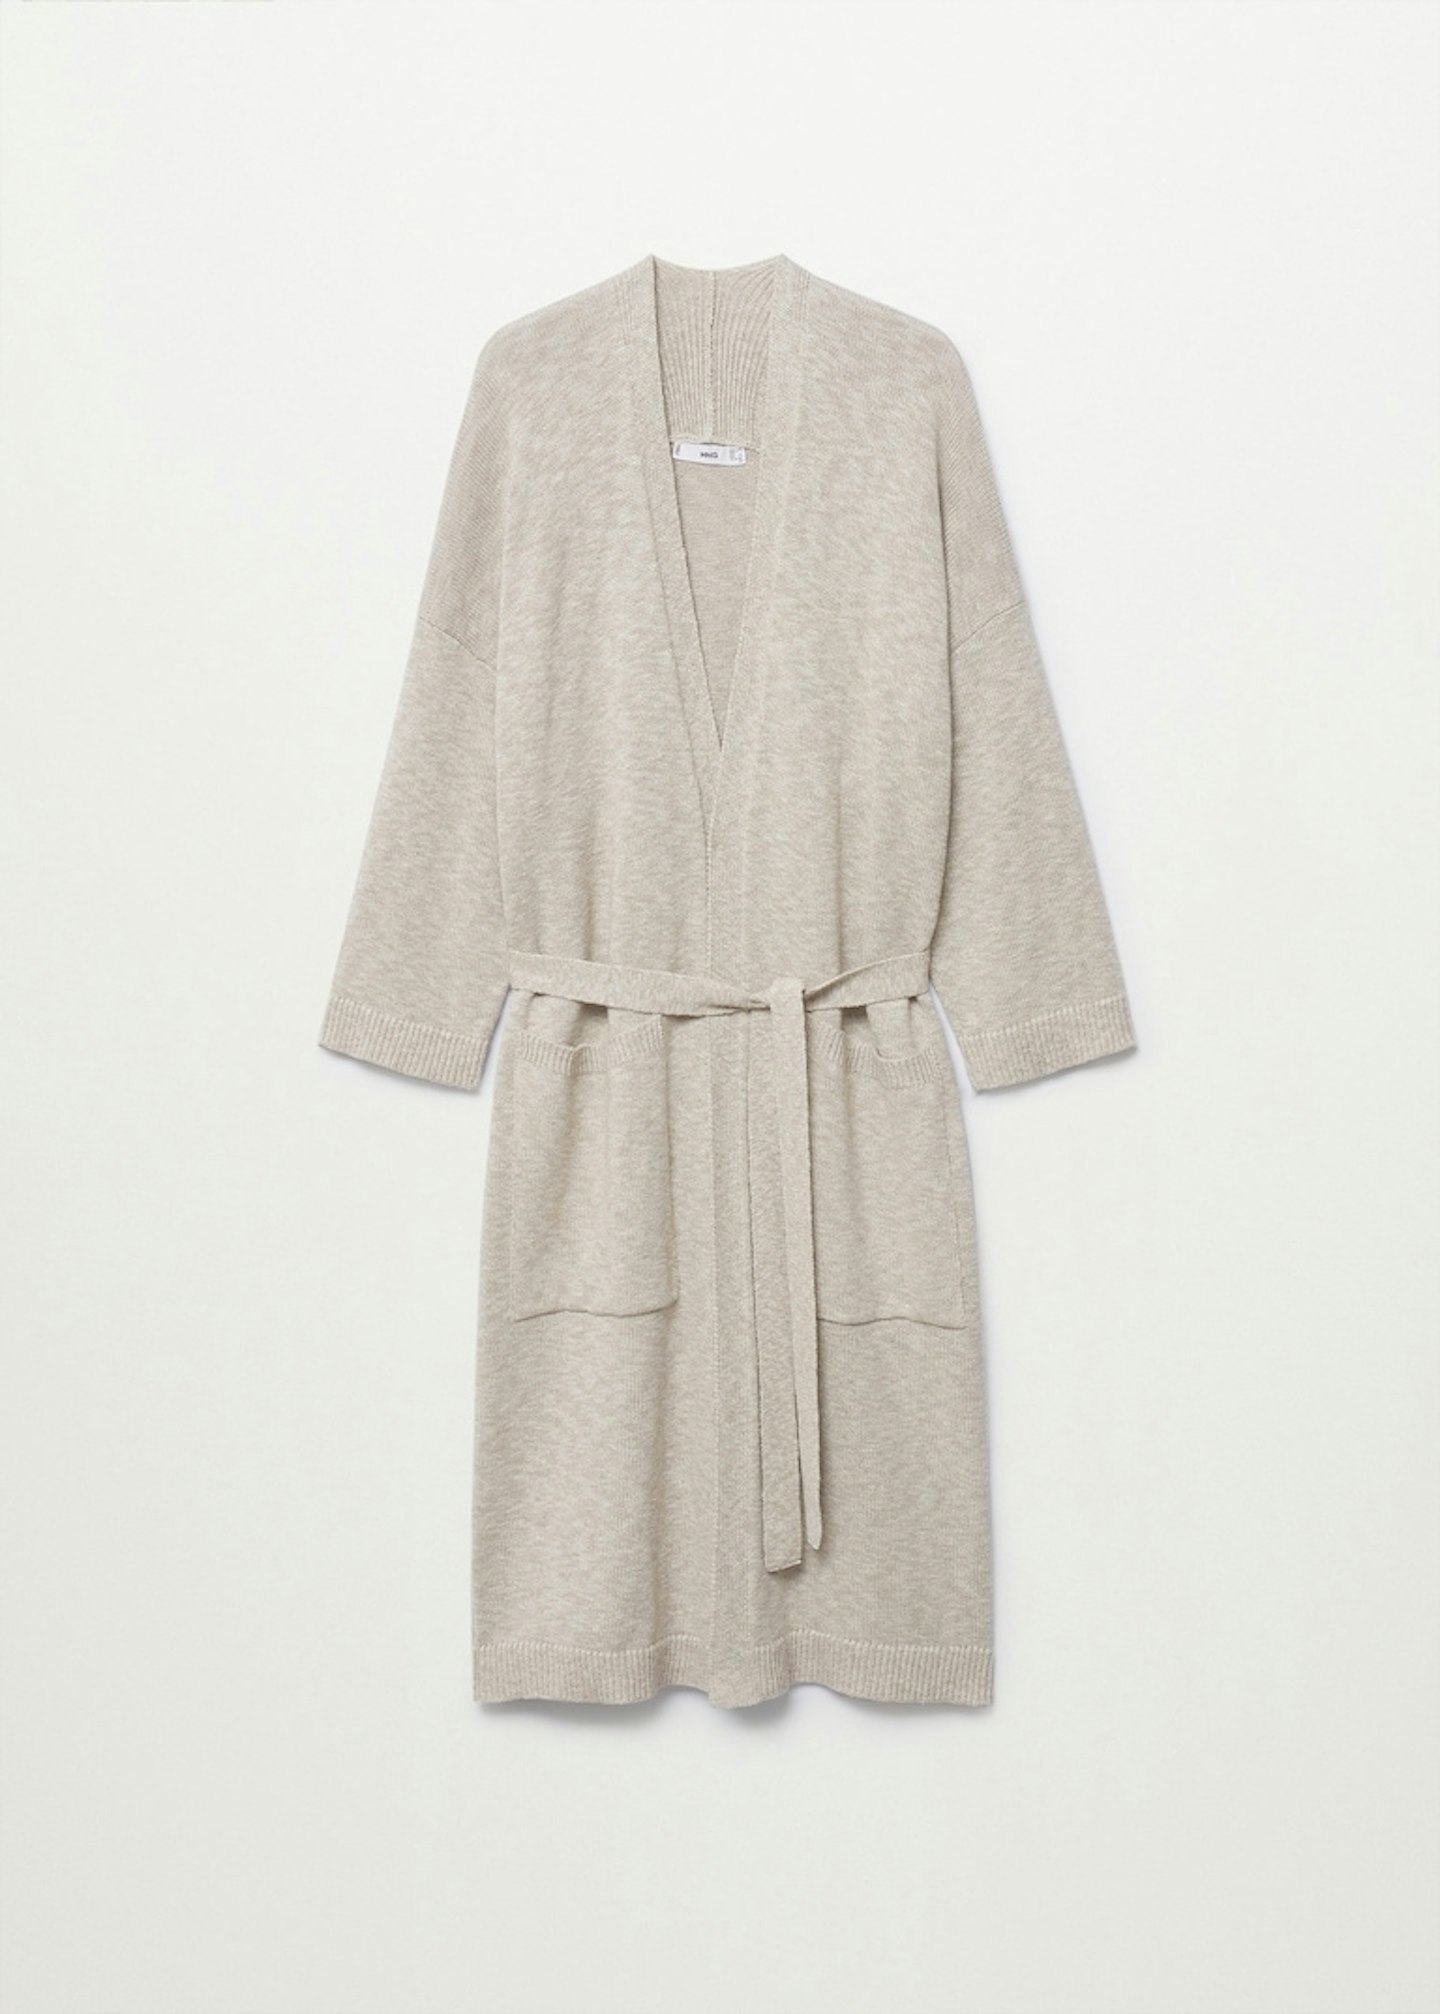 Mango, Linen Cotton Robe, £59.99